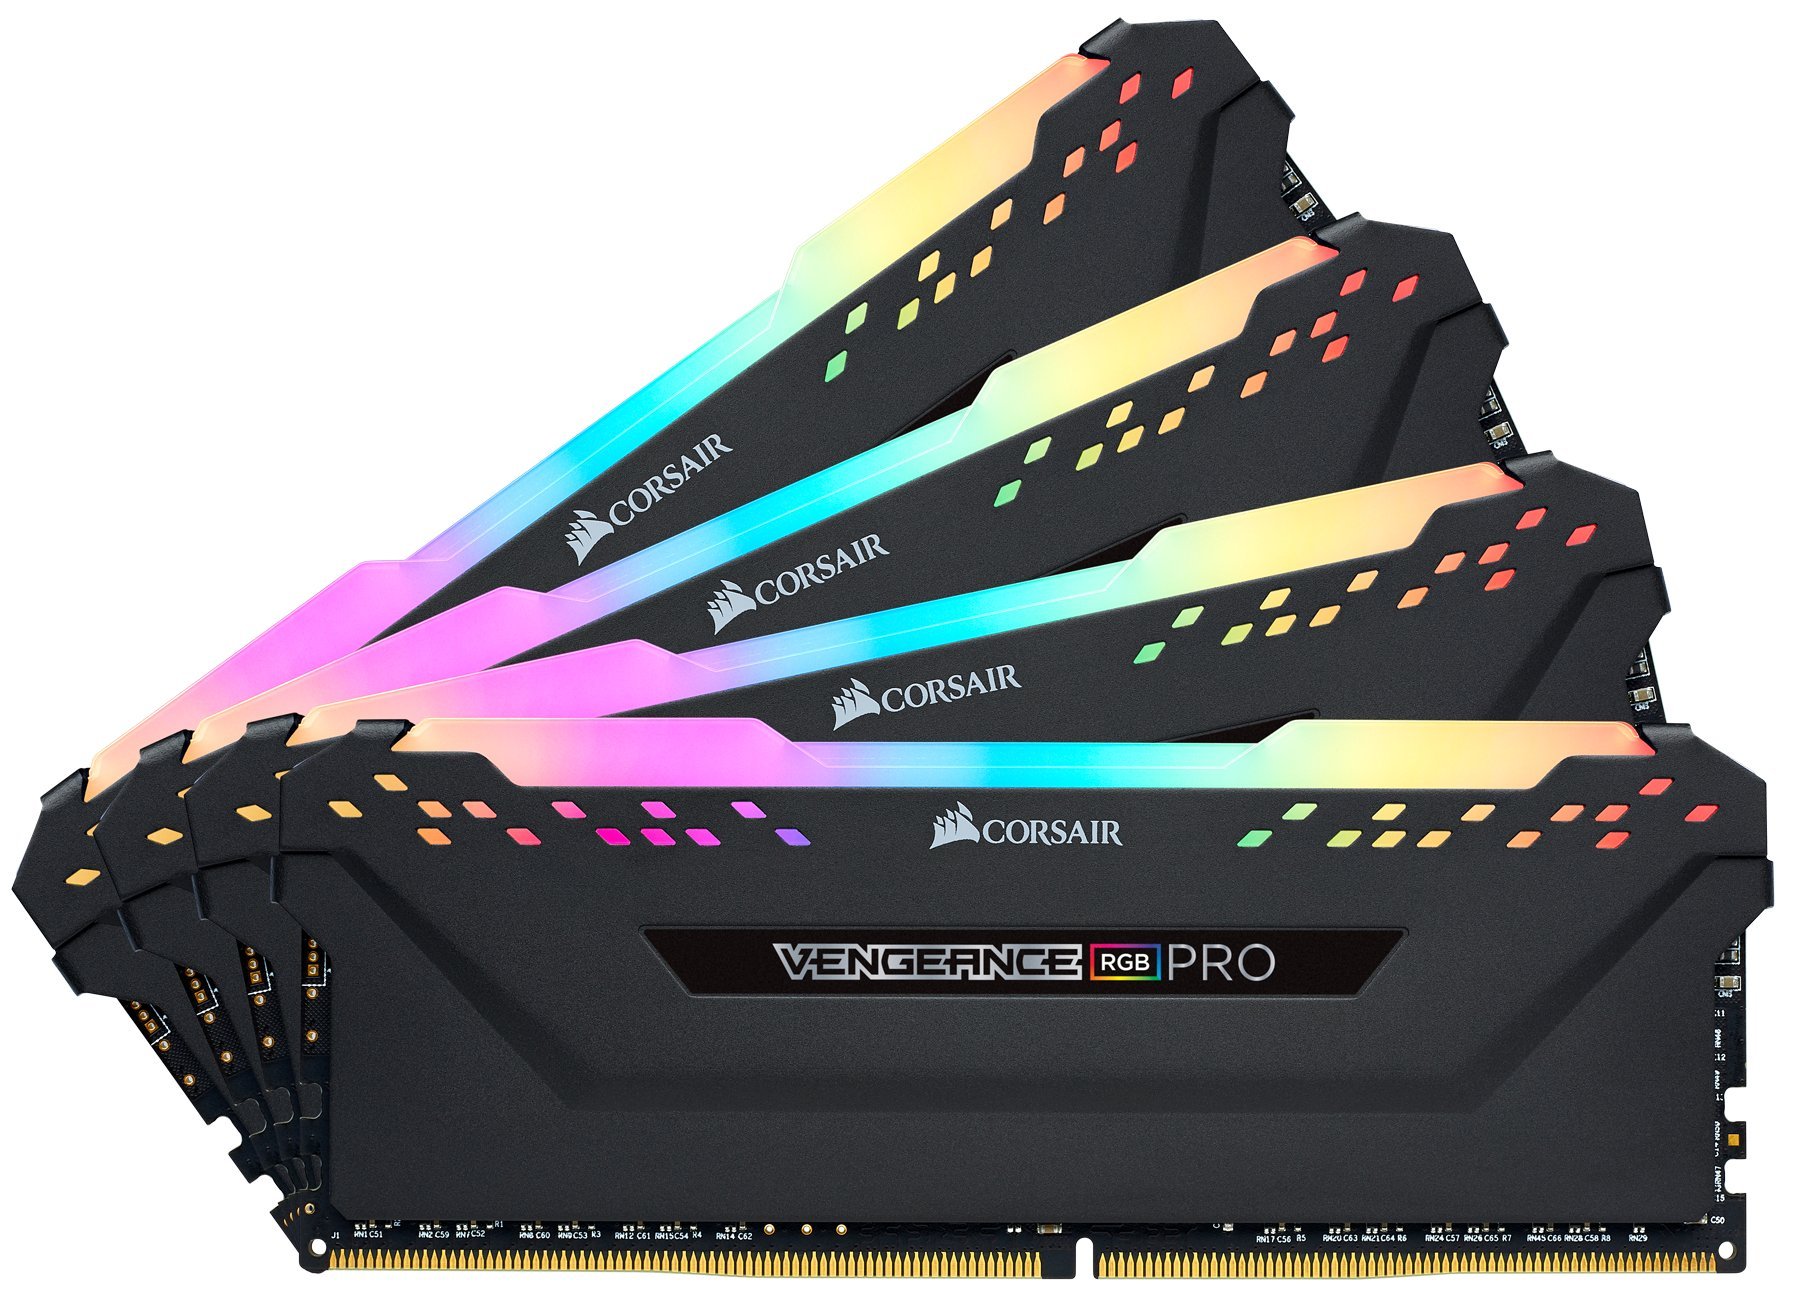 Corsair Vengeance RGB PRO 32GB (4x8GB) DDR4 3600MHz C18 XMP 2.0 Enthusiast RGB LED-Beleuchtung Speicherkit - schwarz